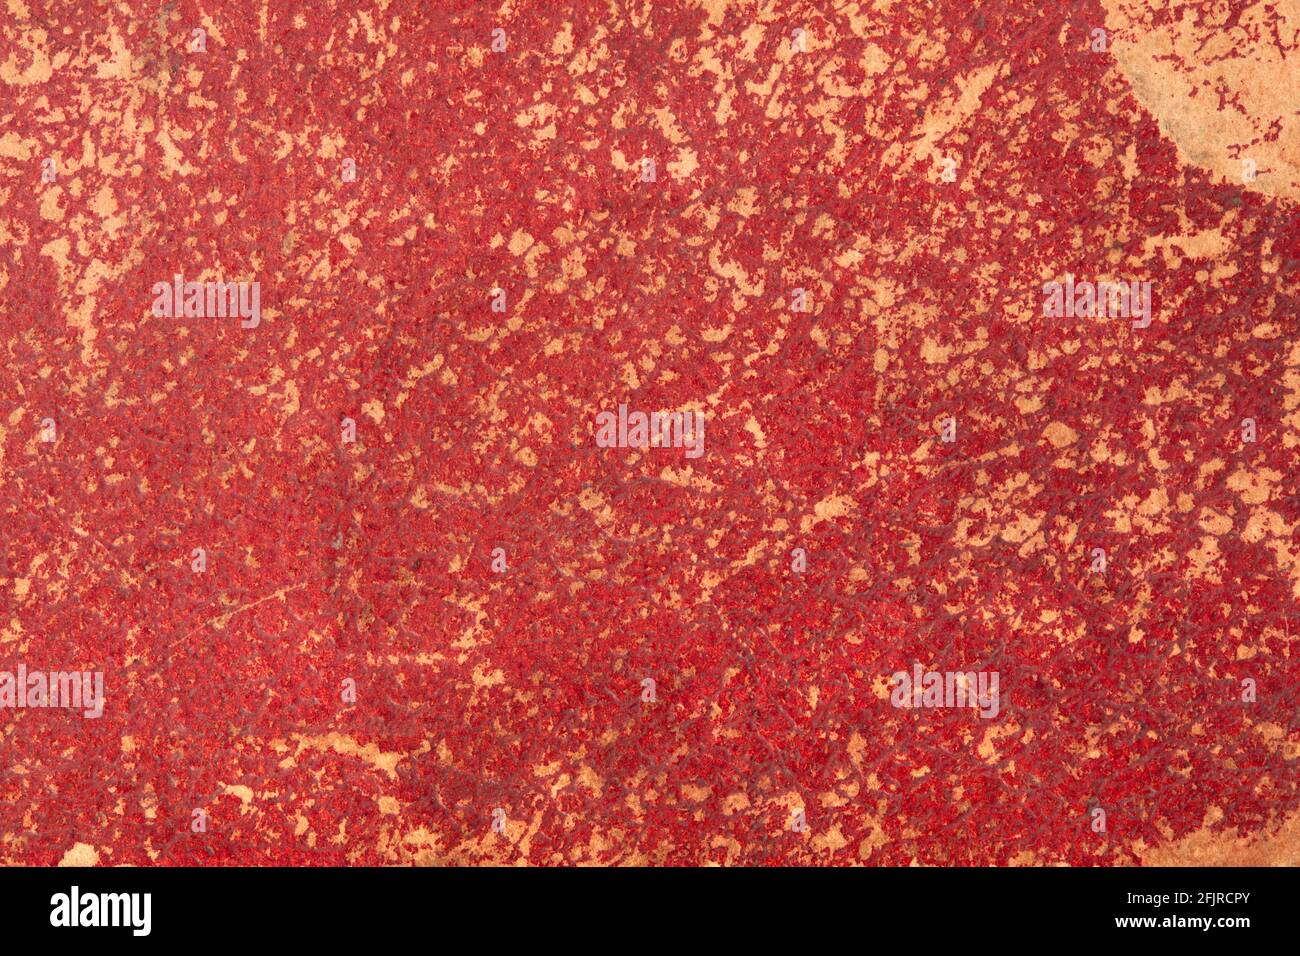 Red, worn cardboard texture background Stock Photo